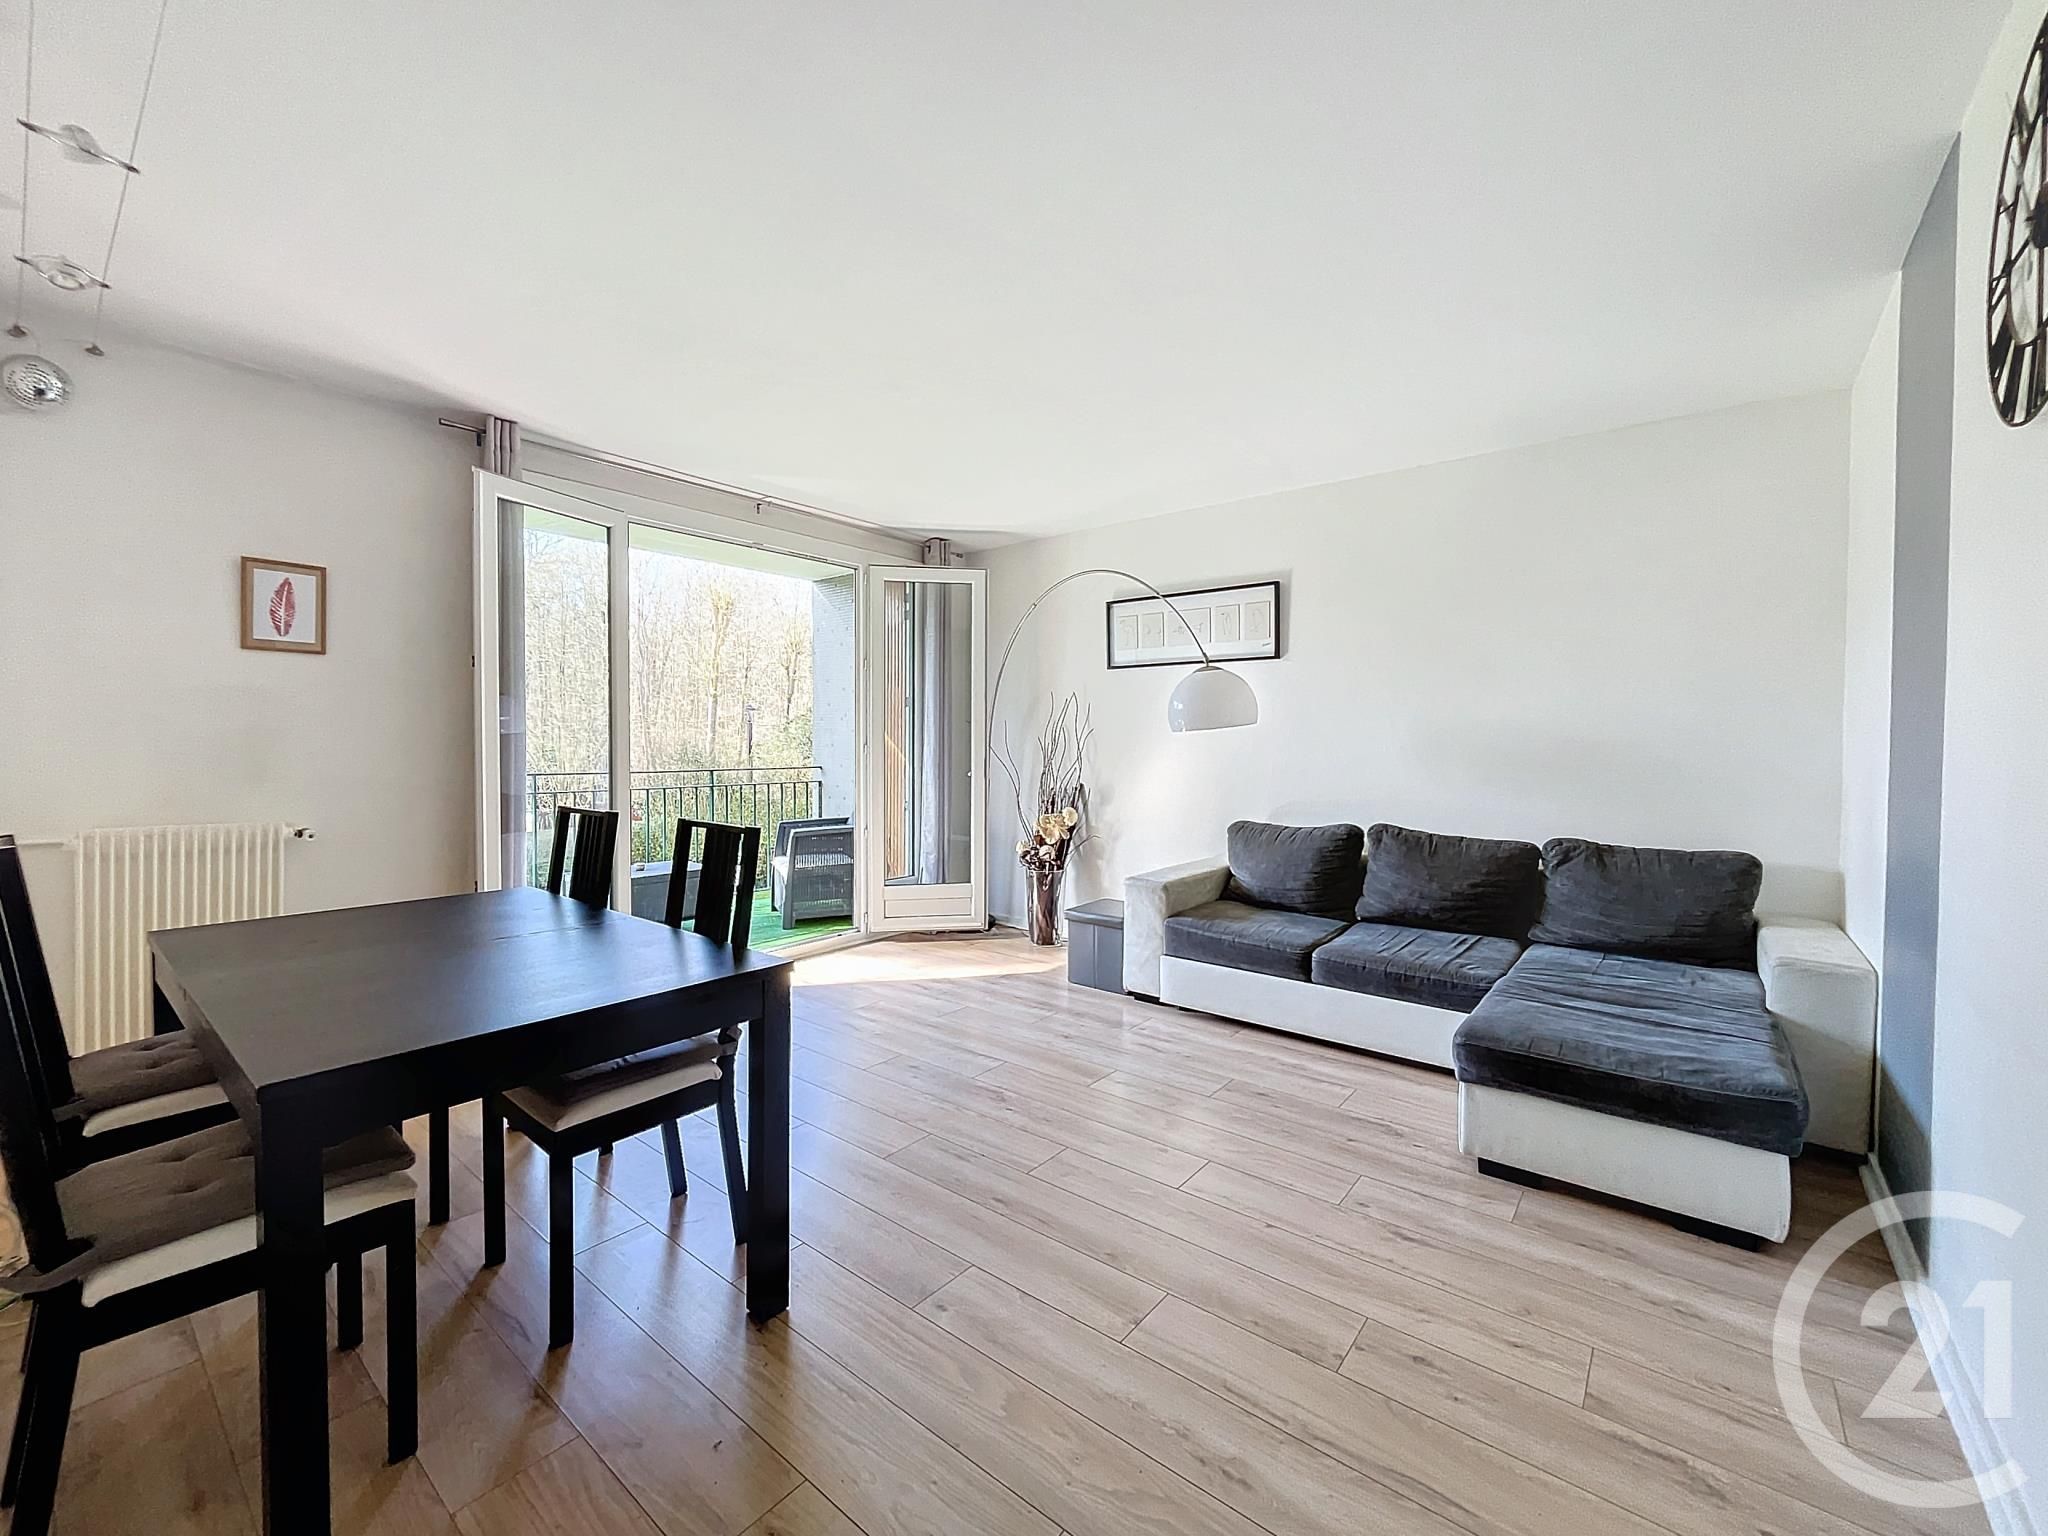 Appartement a louer ville-d'avray - 3 pièce(s) - 70.72 m2 - Surfyn